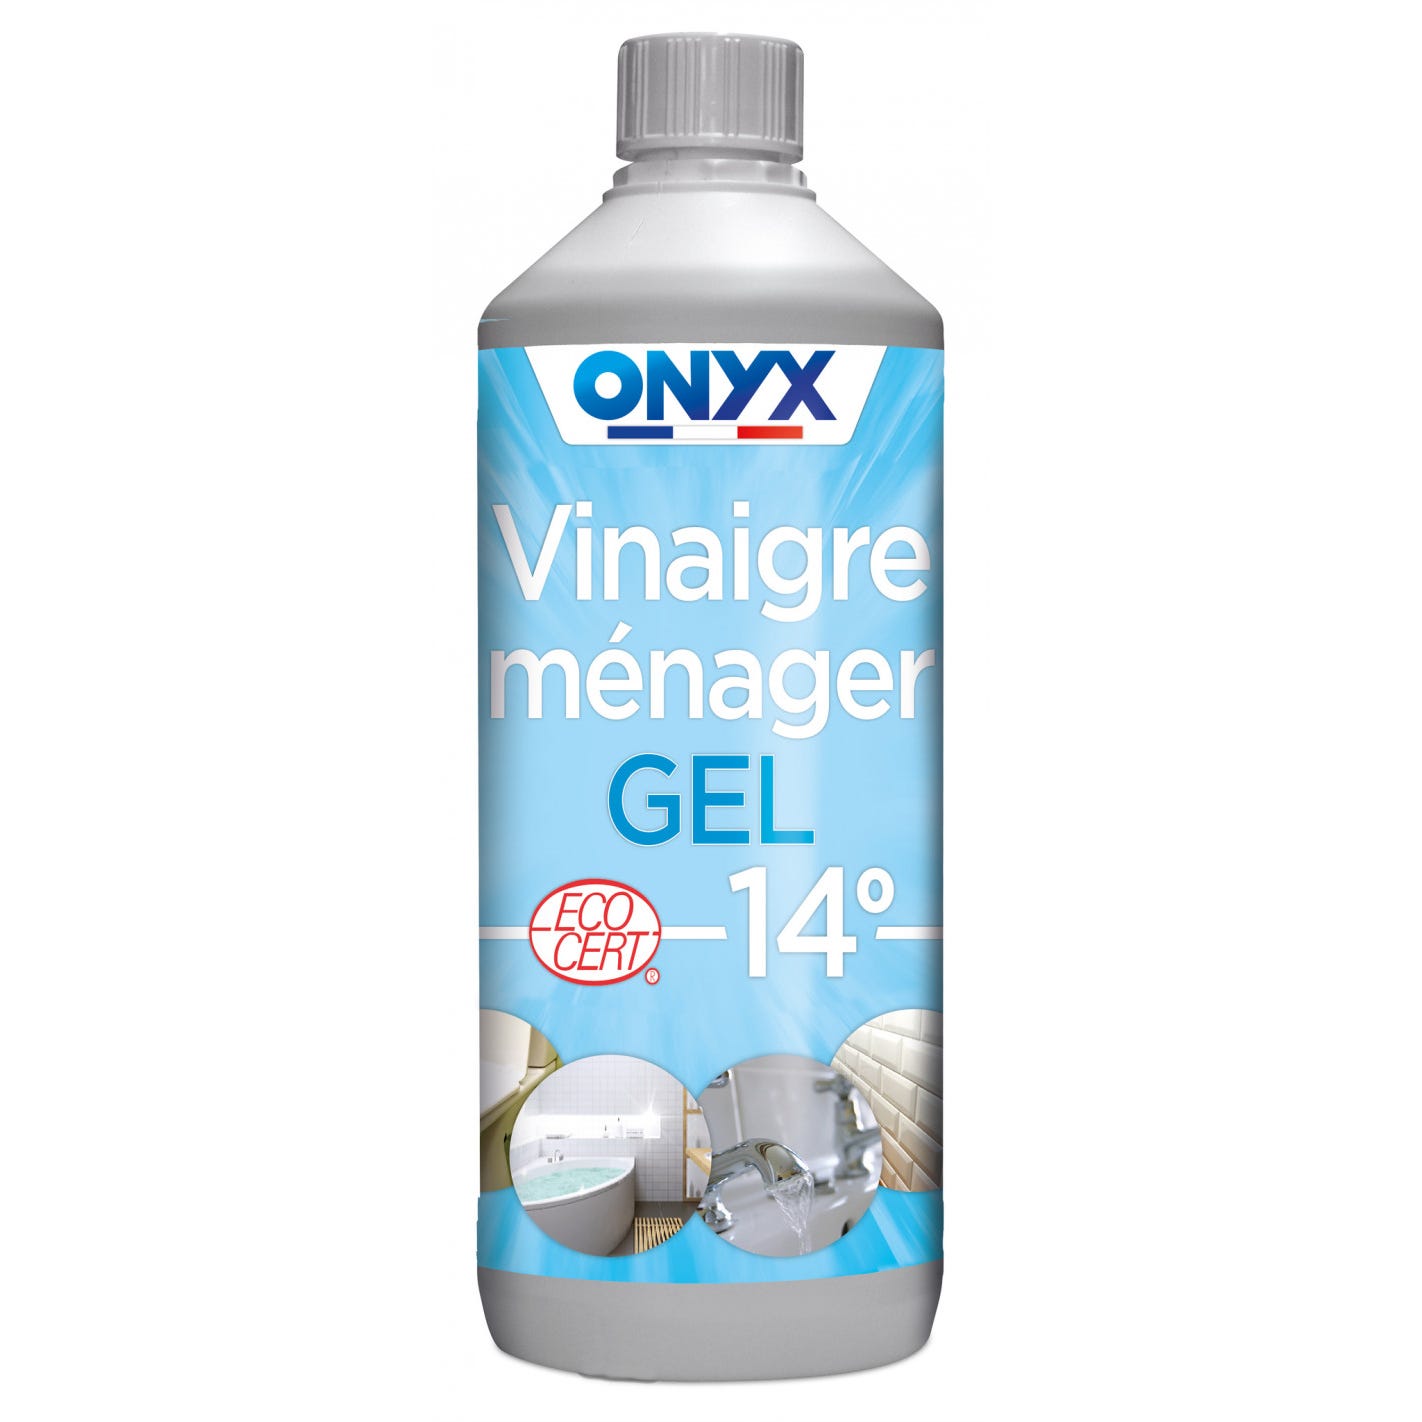 Vinaigre ménager gel 14° Onyx, 1 litre 0